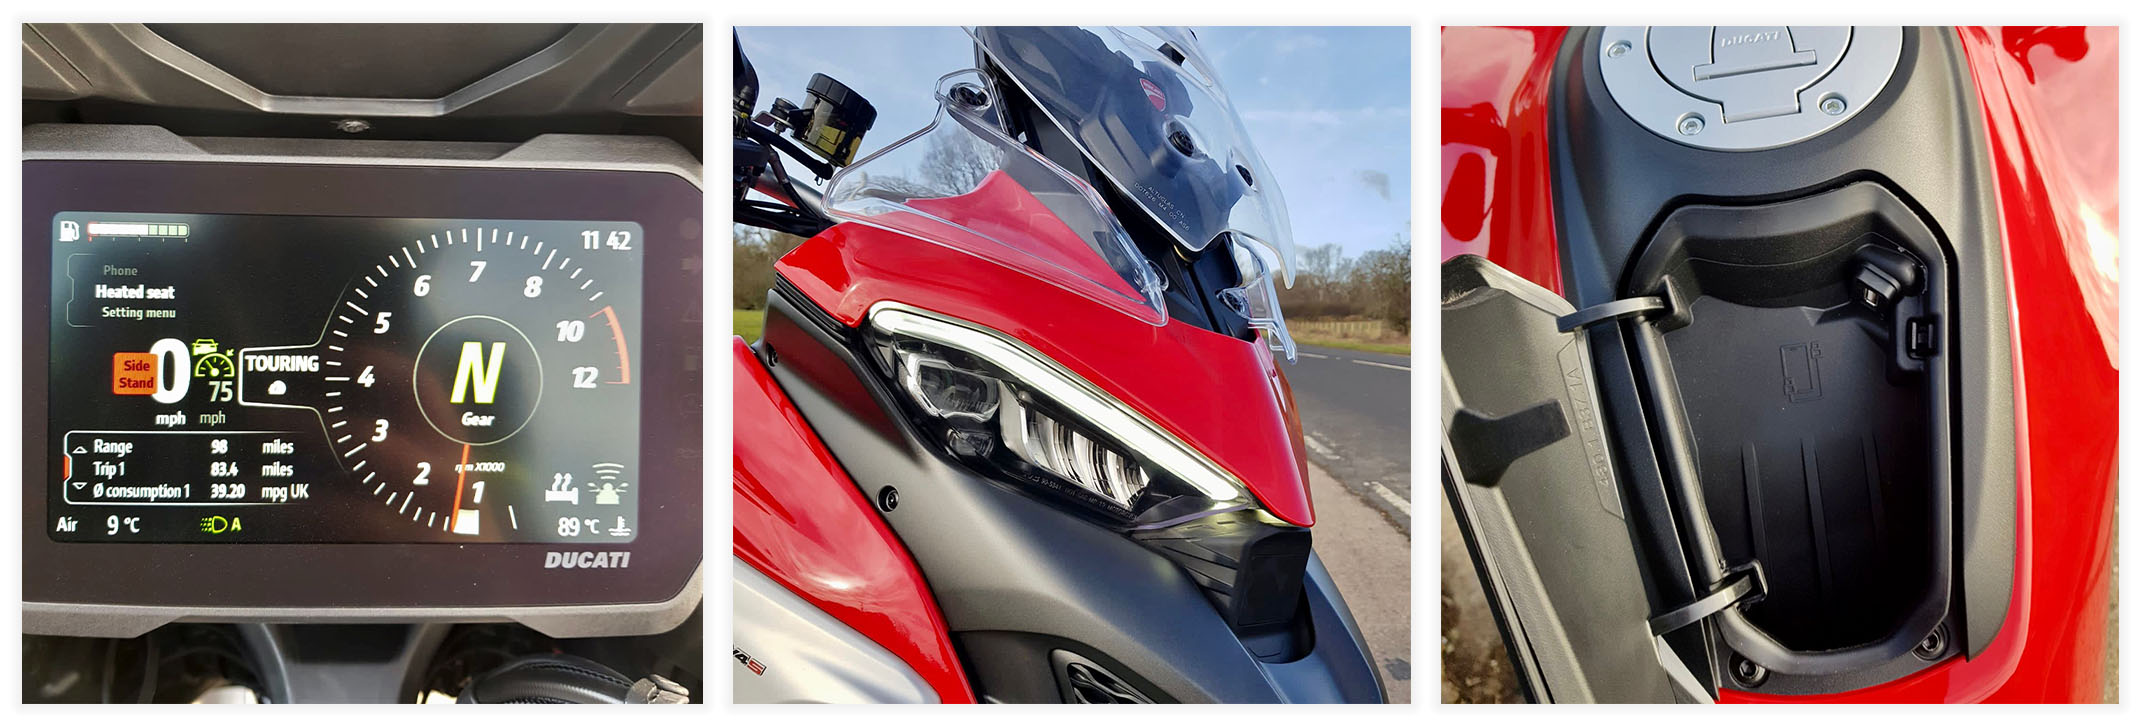 Chris reviews the Ducati Multistrada V4 S Full at Laguna Motorcycles in Ashford